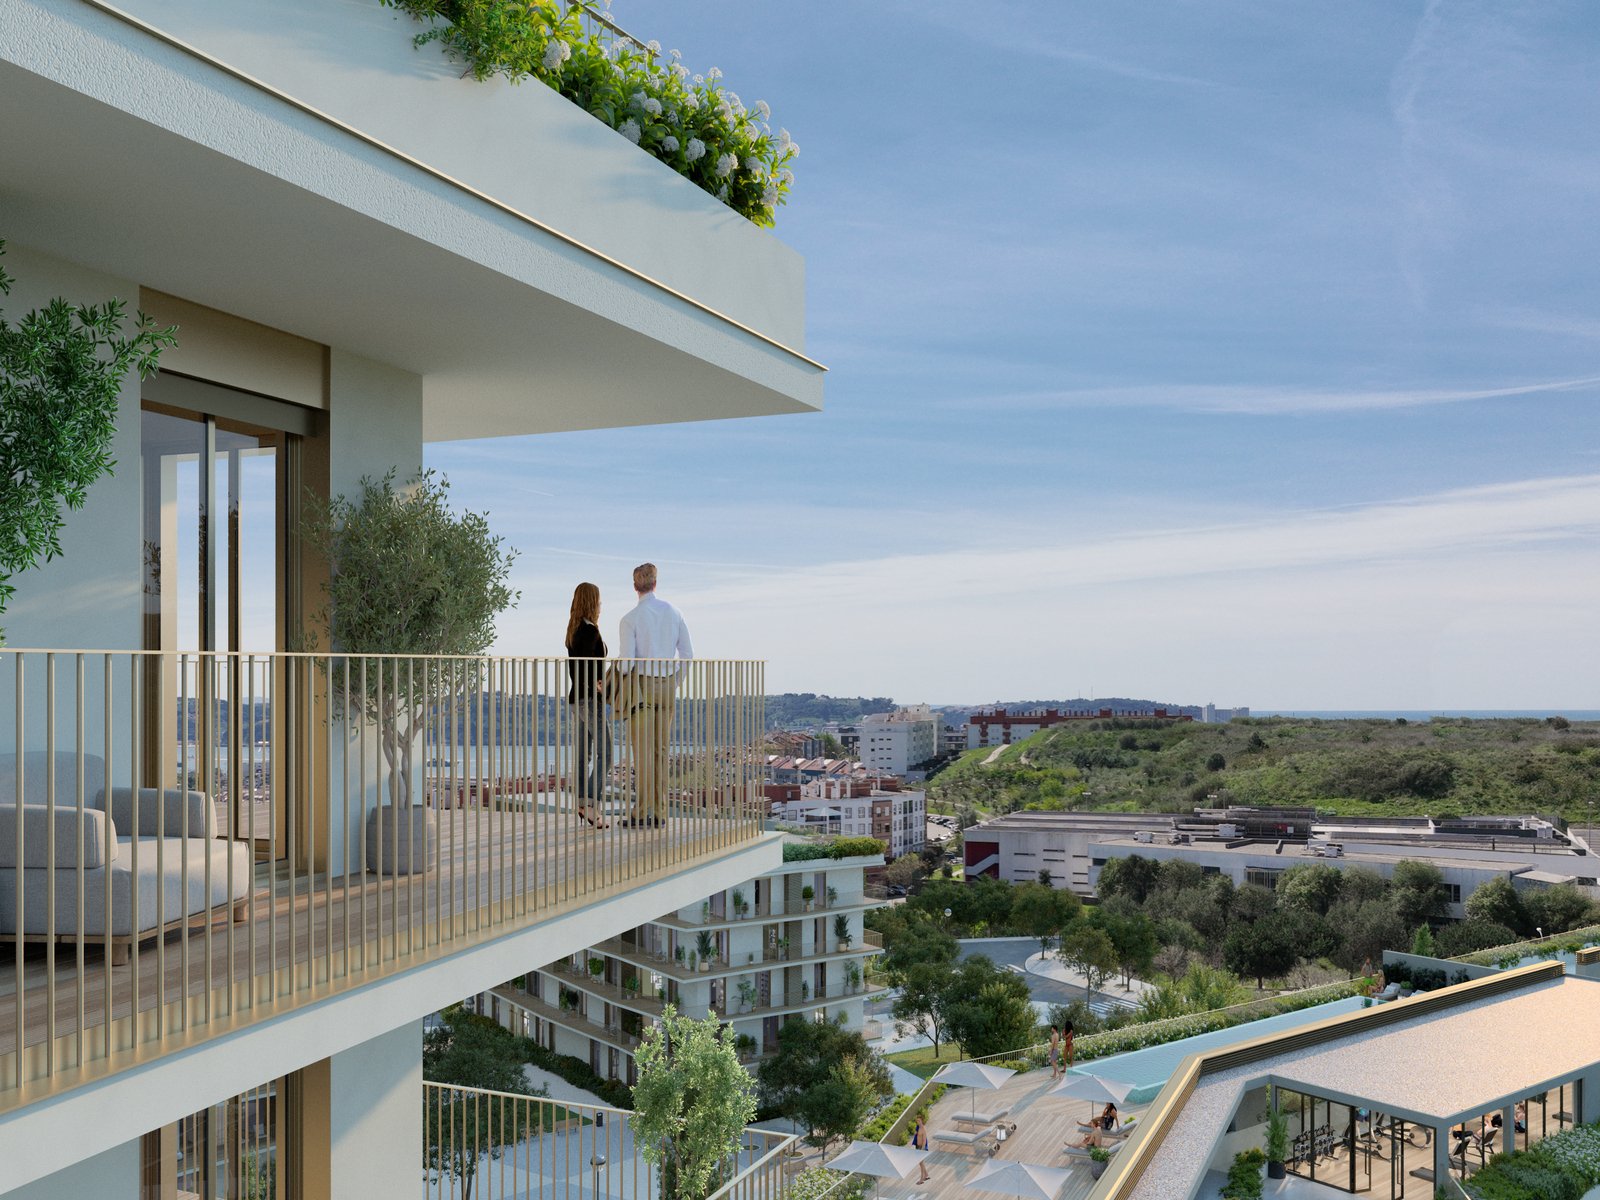 2 bedroom apartment with balcony in new development in Miraflores